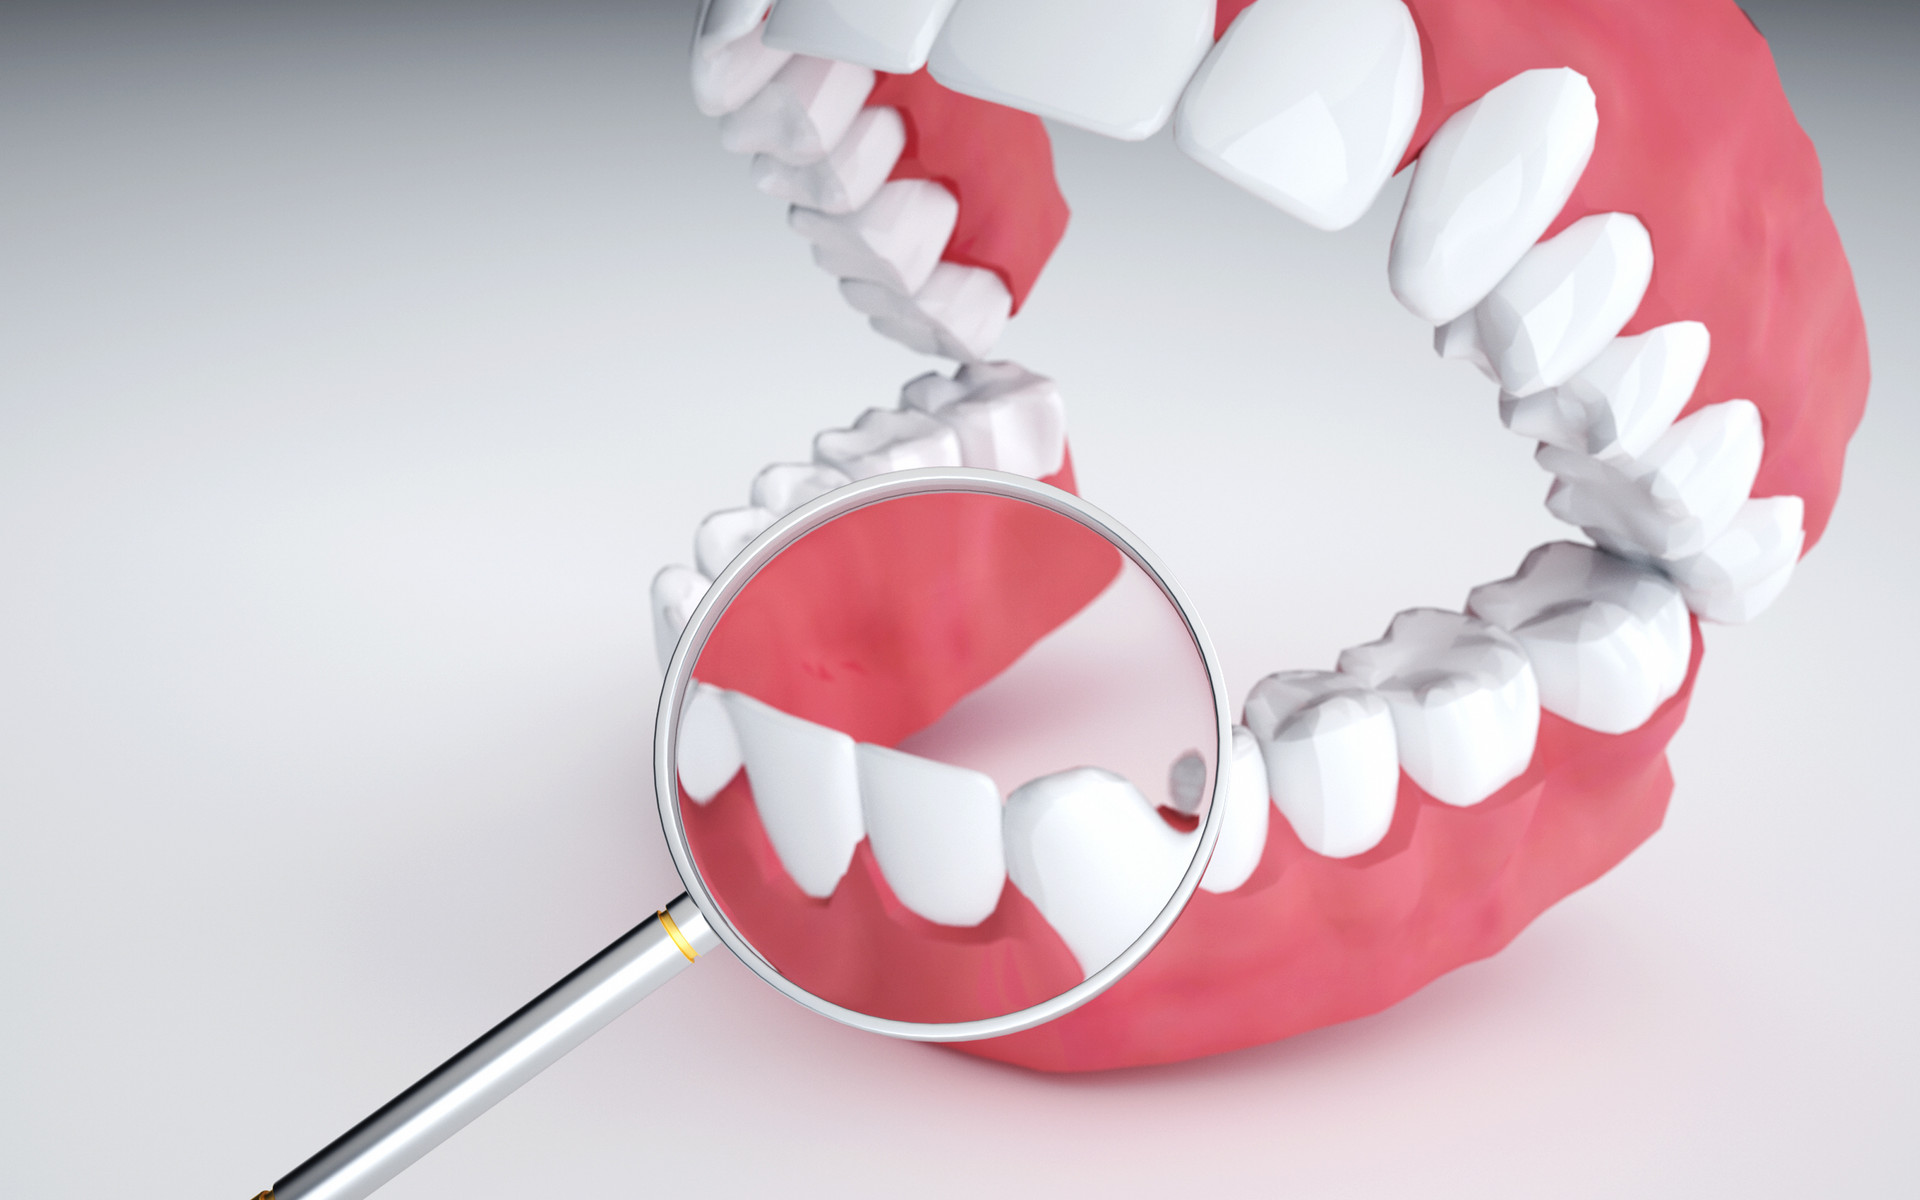 Clin Oral Investig：与传统香烟相比，电子烟对牙周组织的影响较小，但是仍需警惕